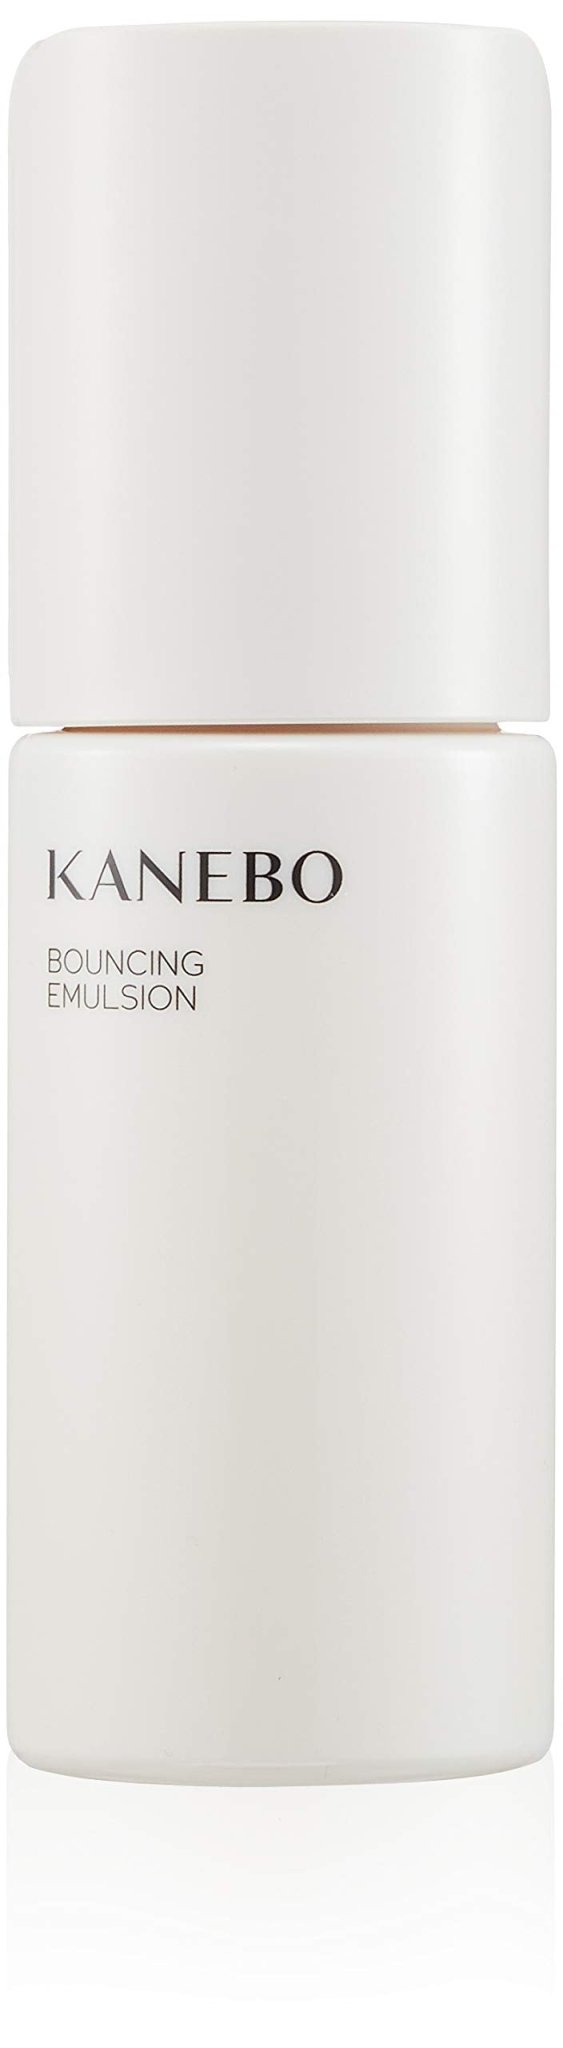 Kanebo Bouncing Emulsion High Quality 100ml Skincare Product by Kanebo